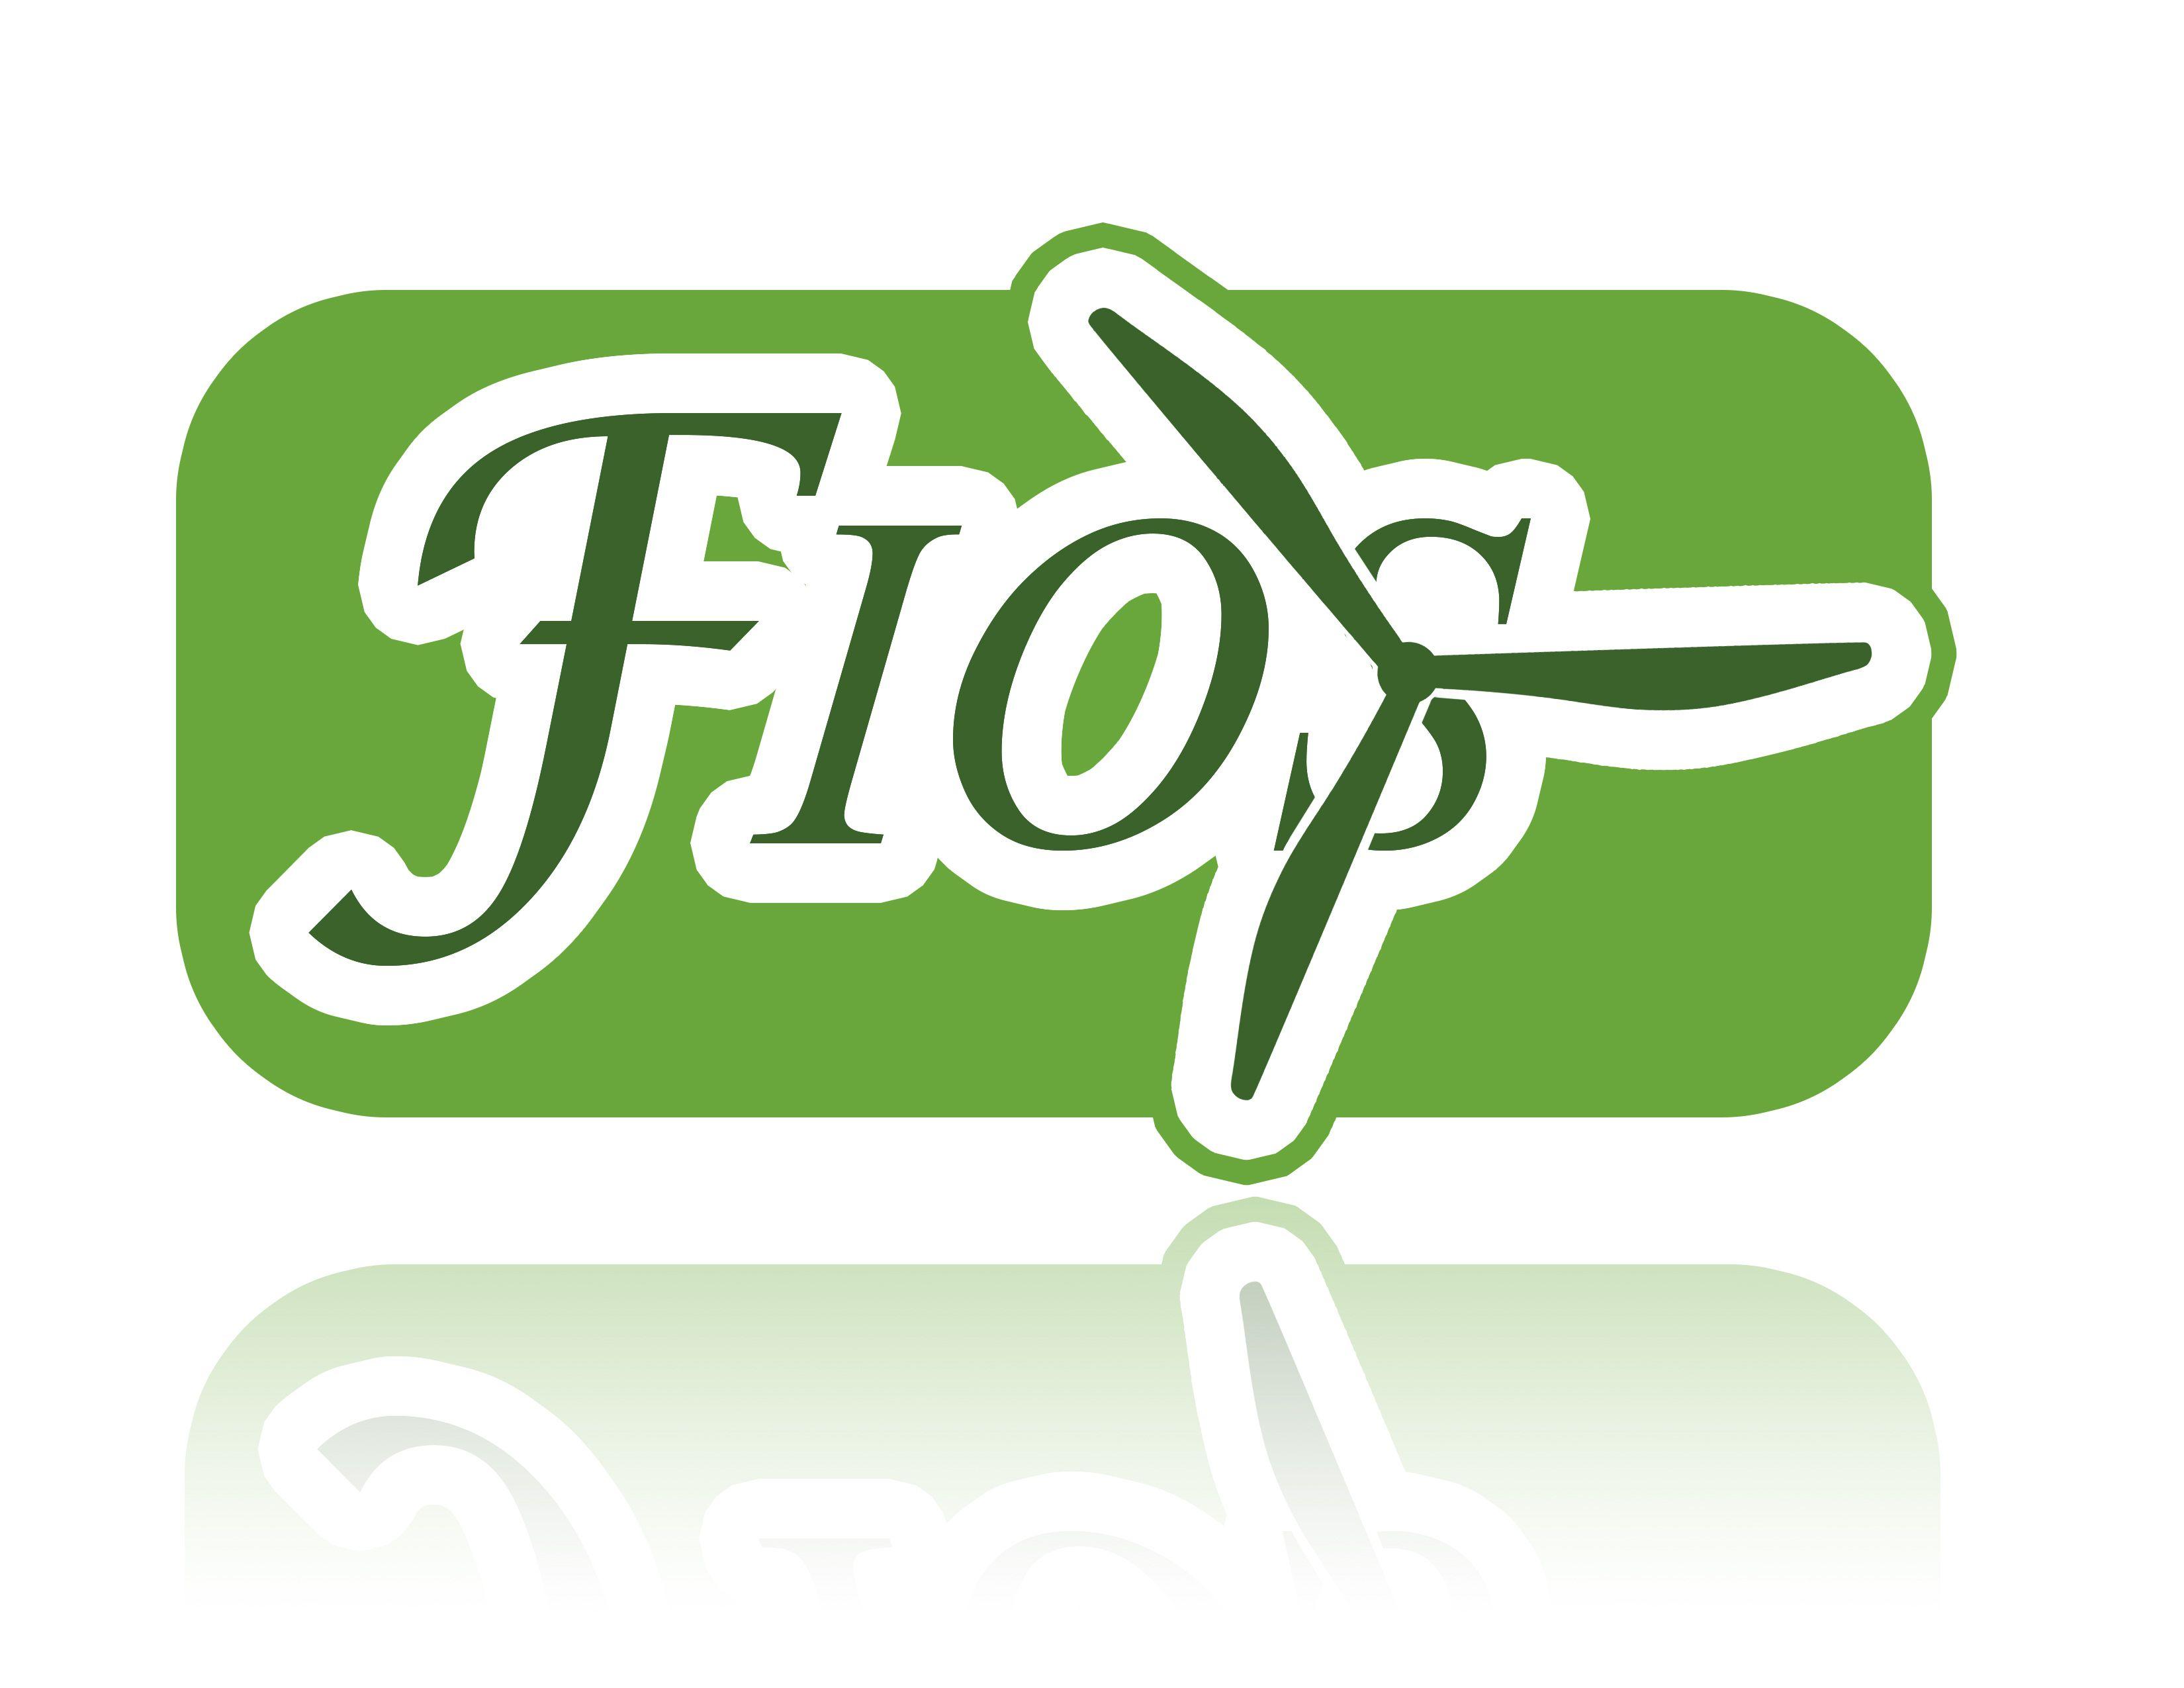 FiOS Logo - File:FIOS LOGO.jpg - Wikimedia Commons